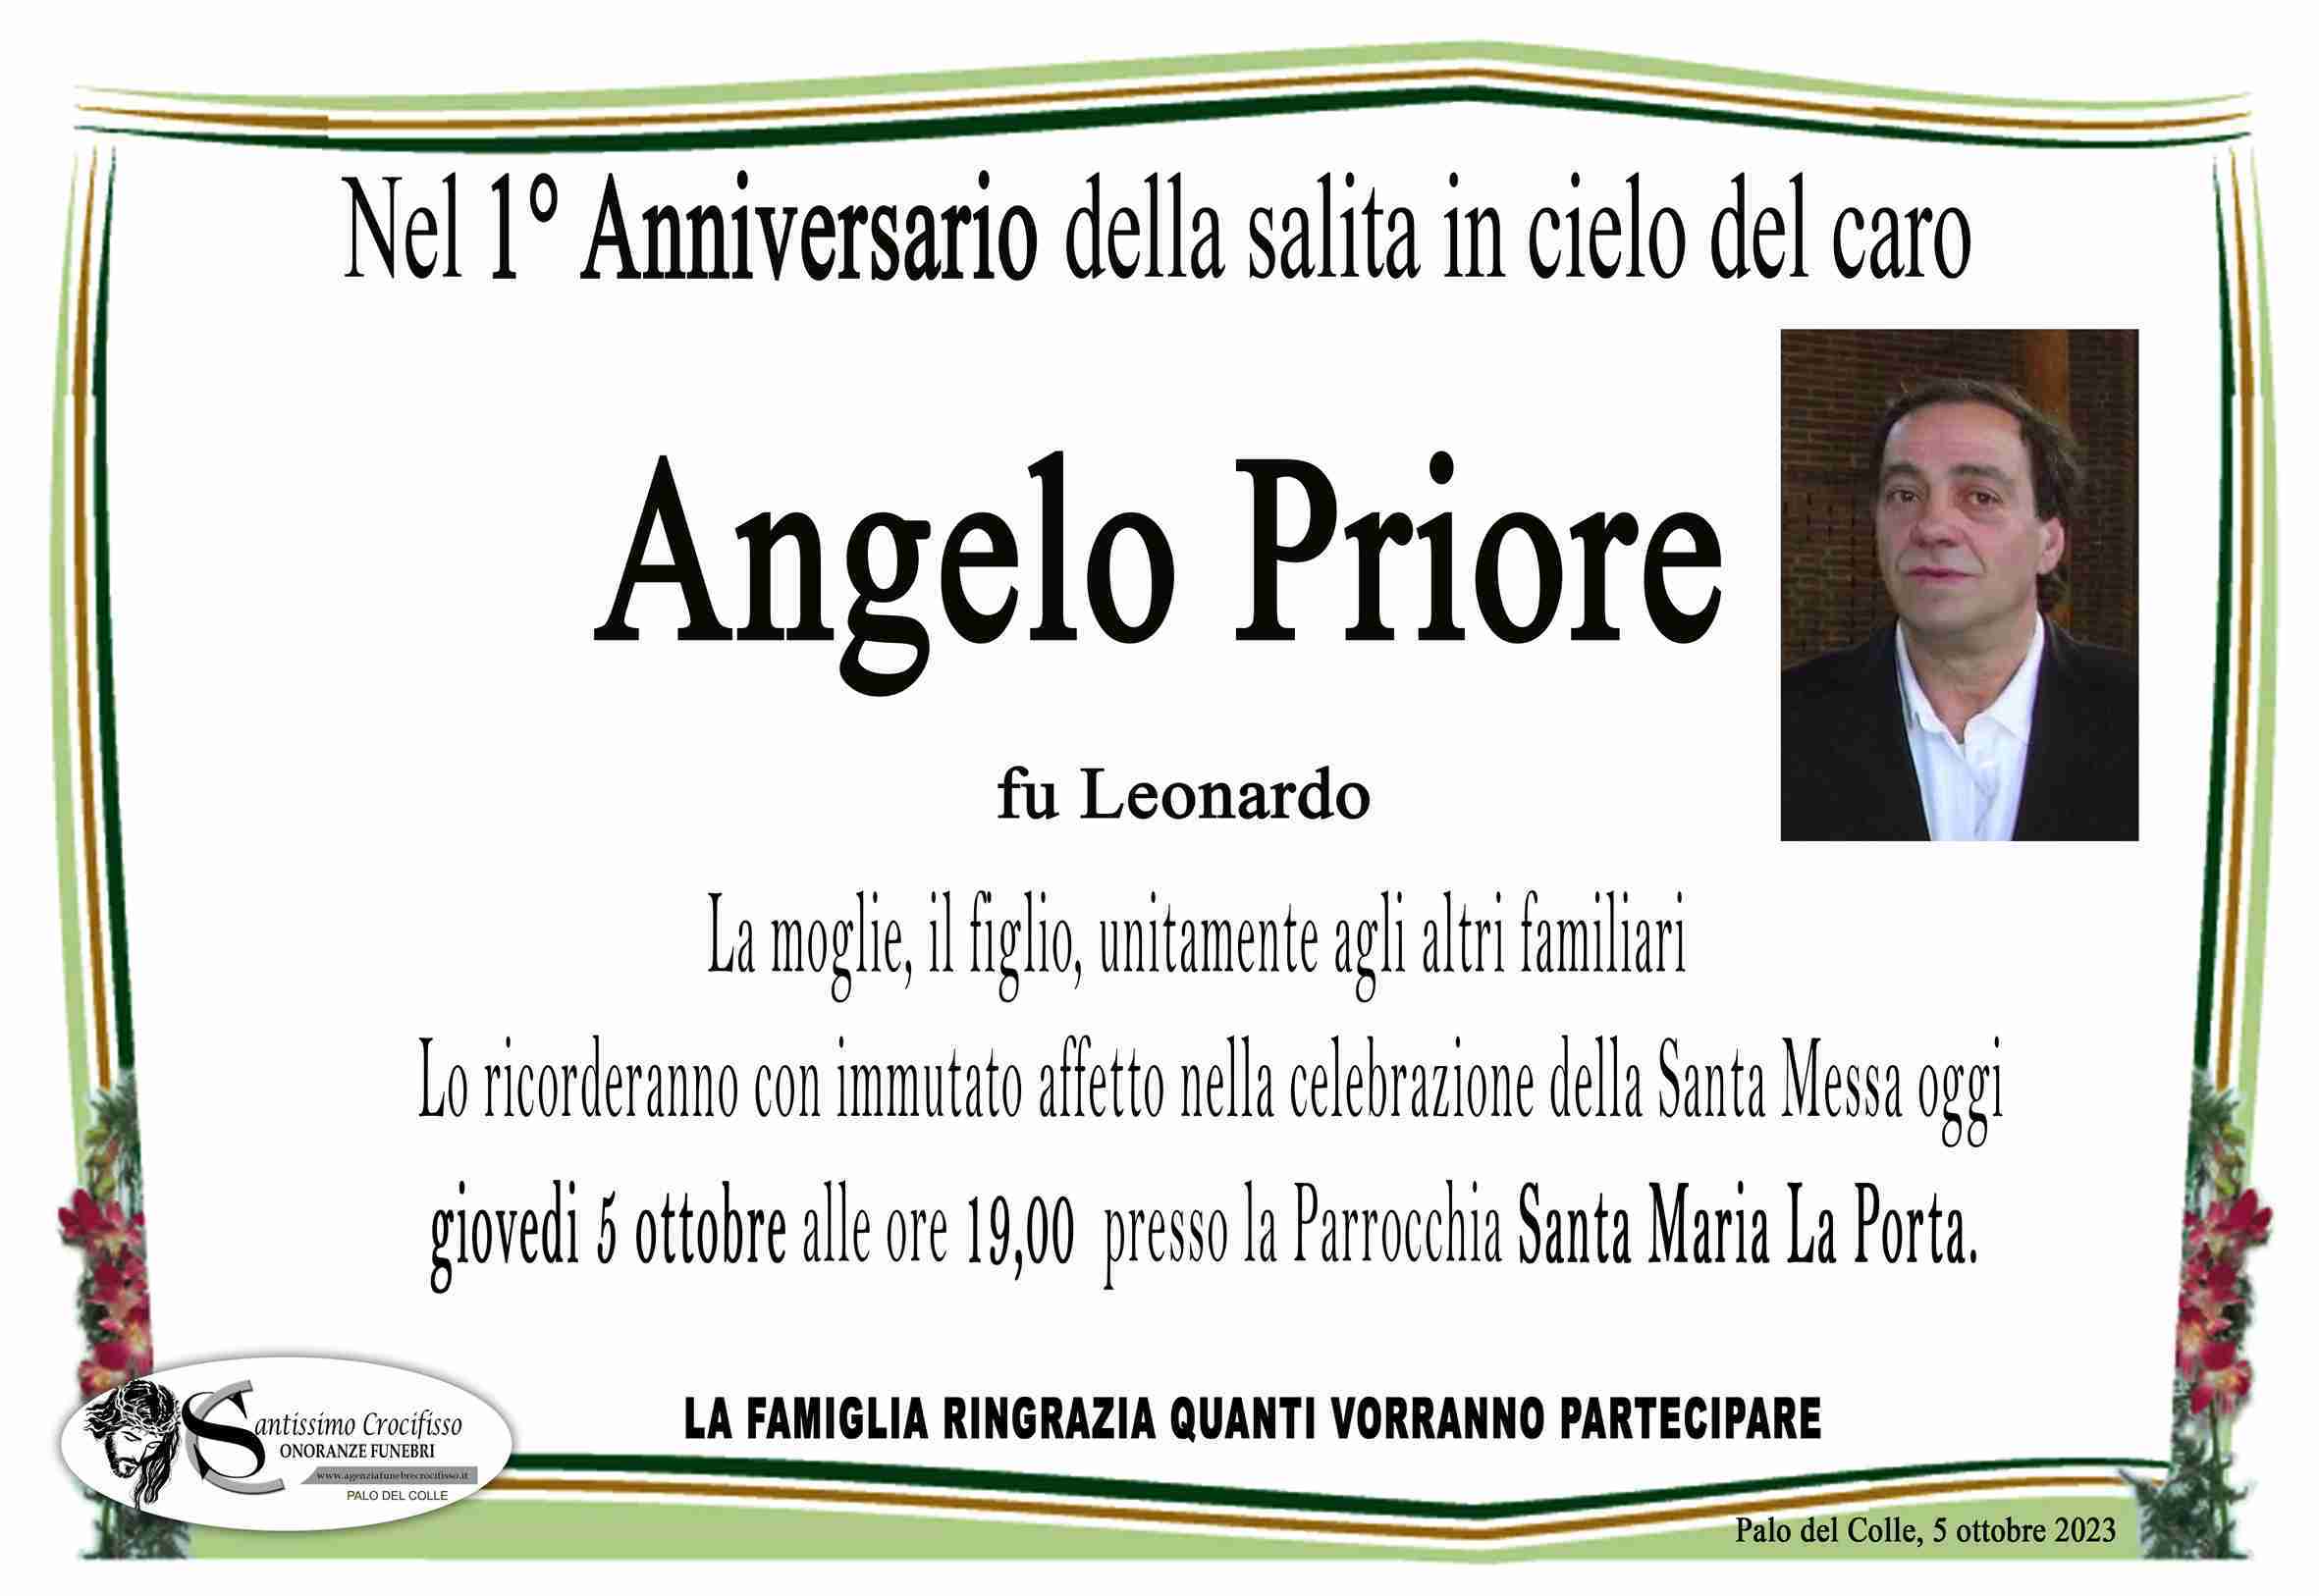 Angelo Priore